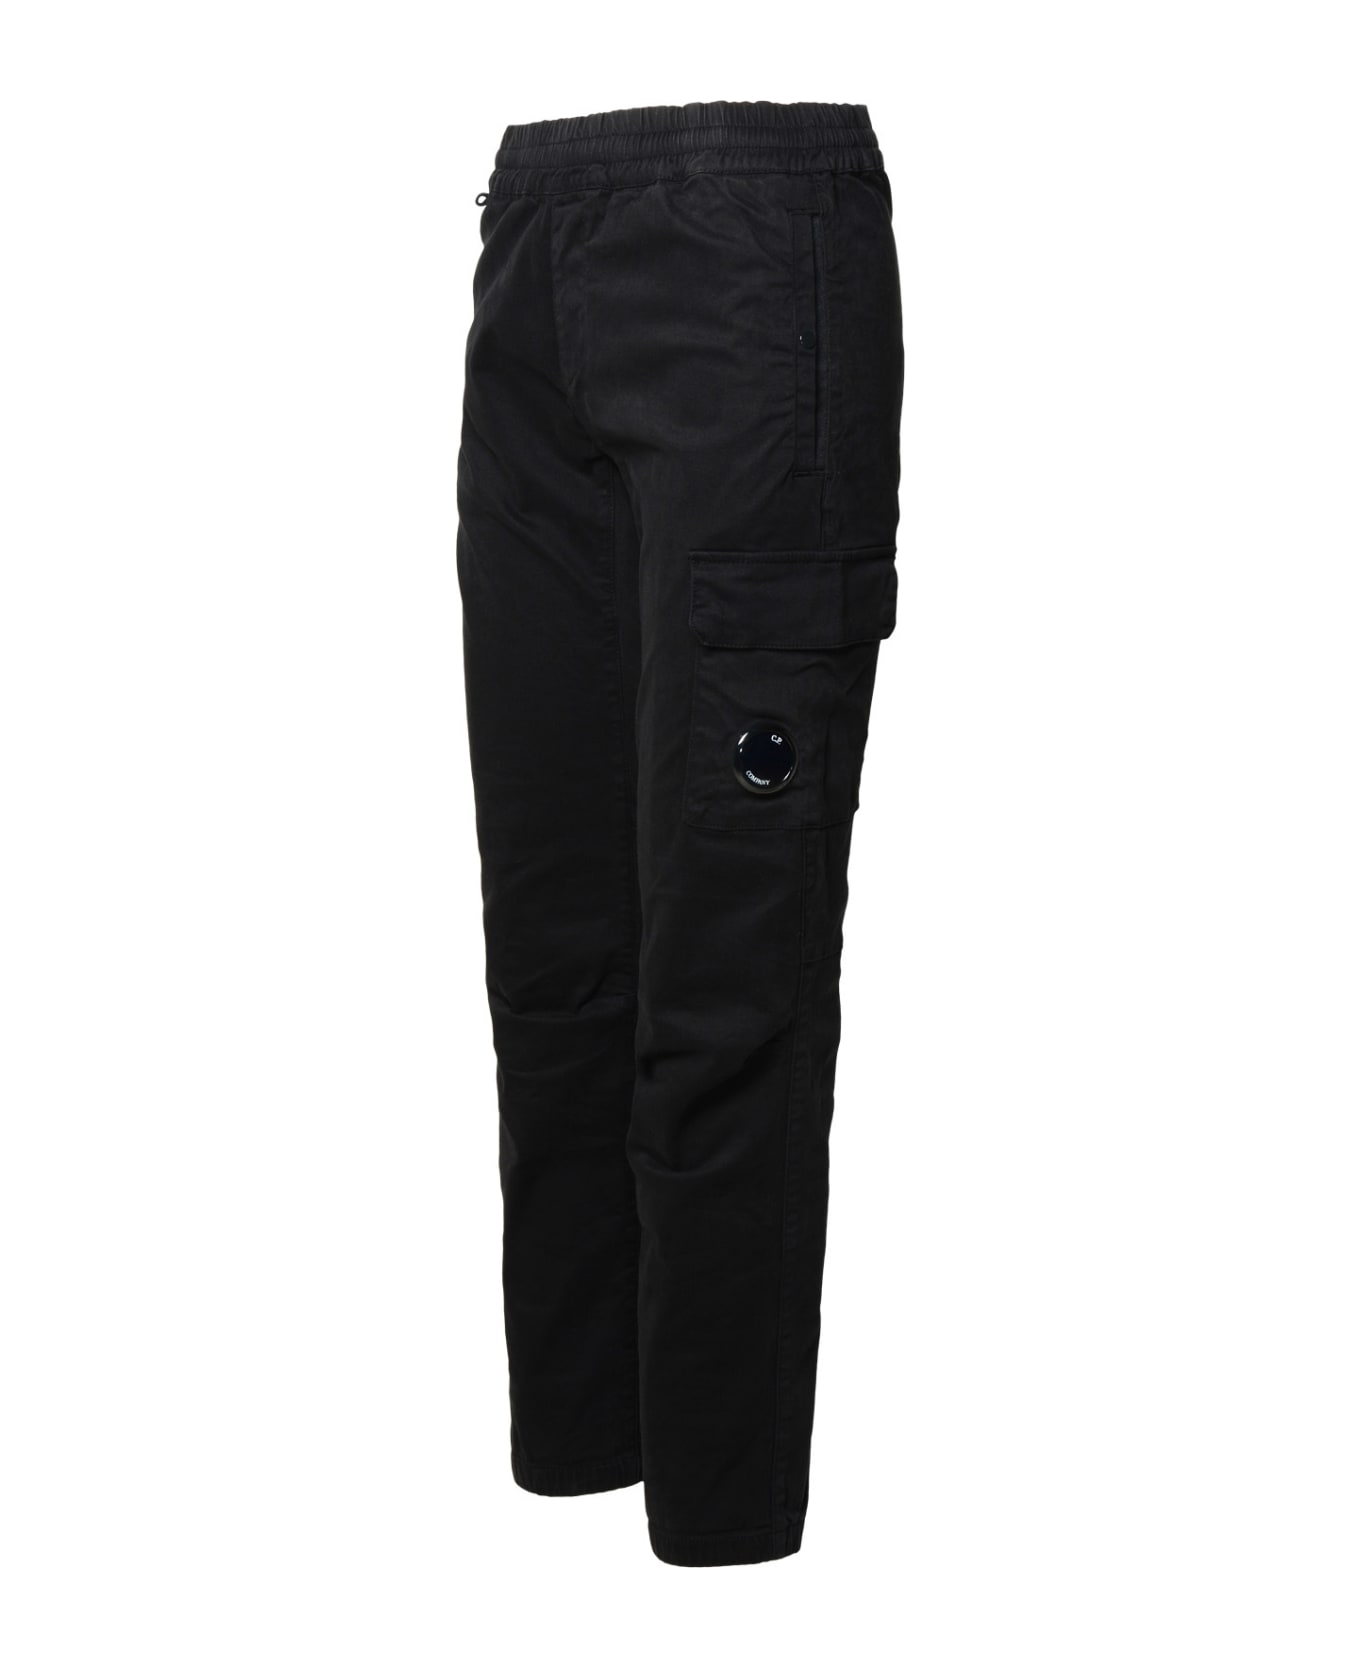 C.P. Company Black Cotton Trousers - Black ボトムス